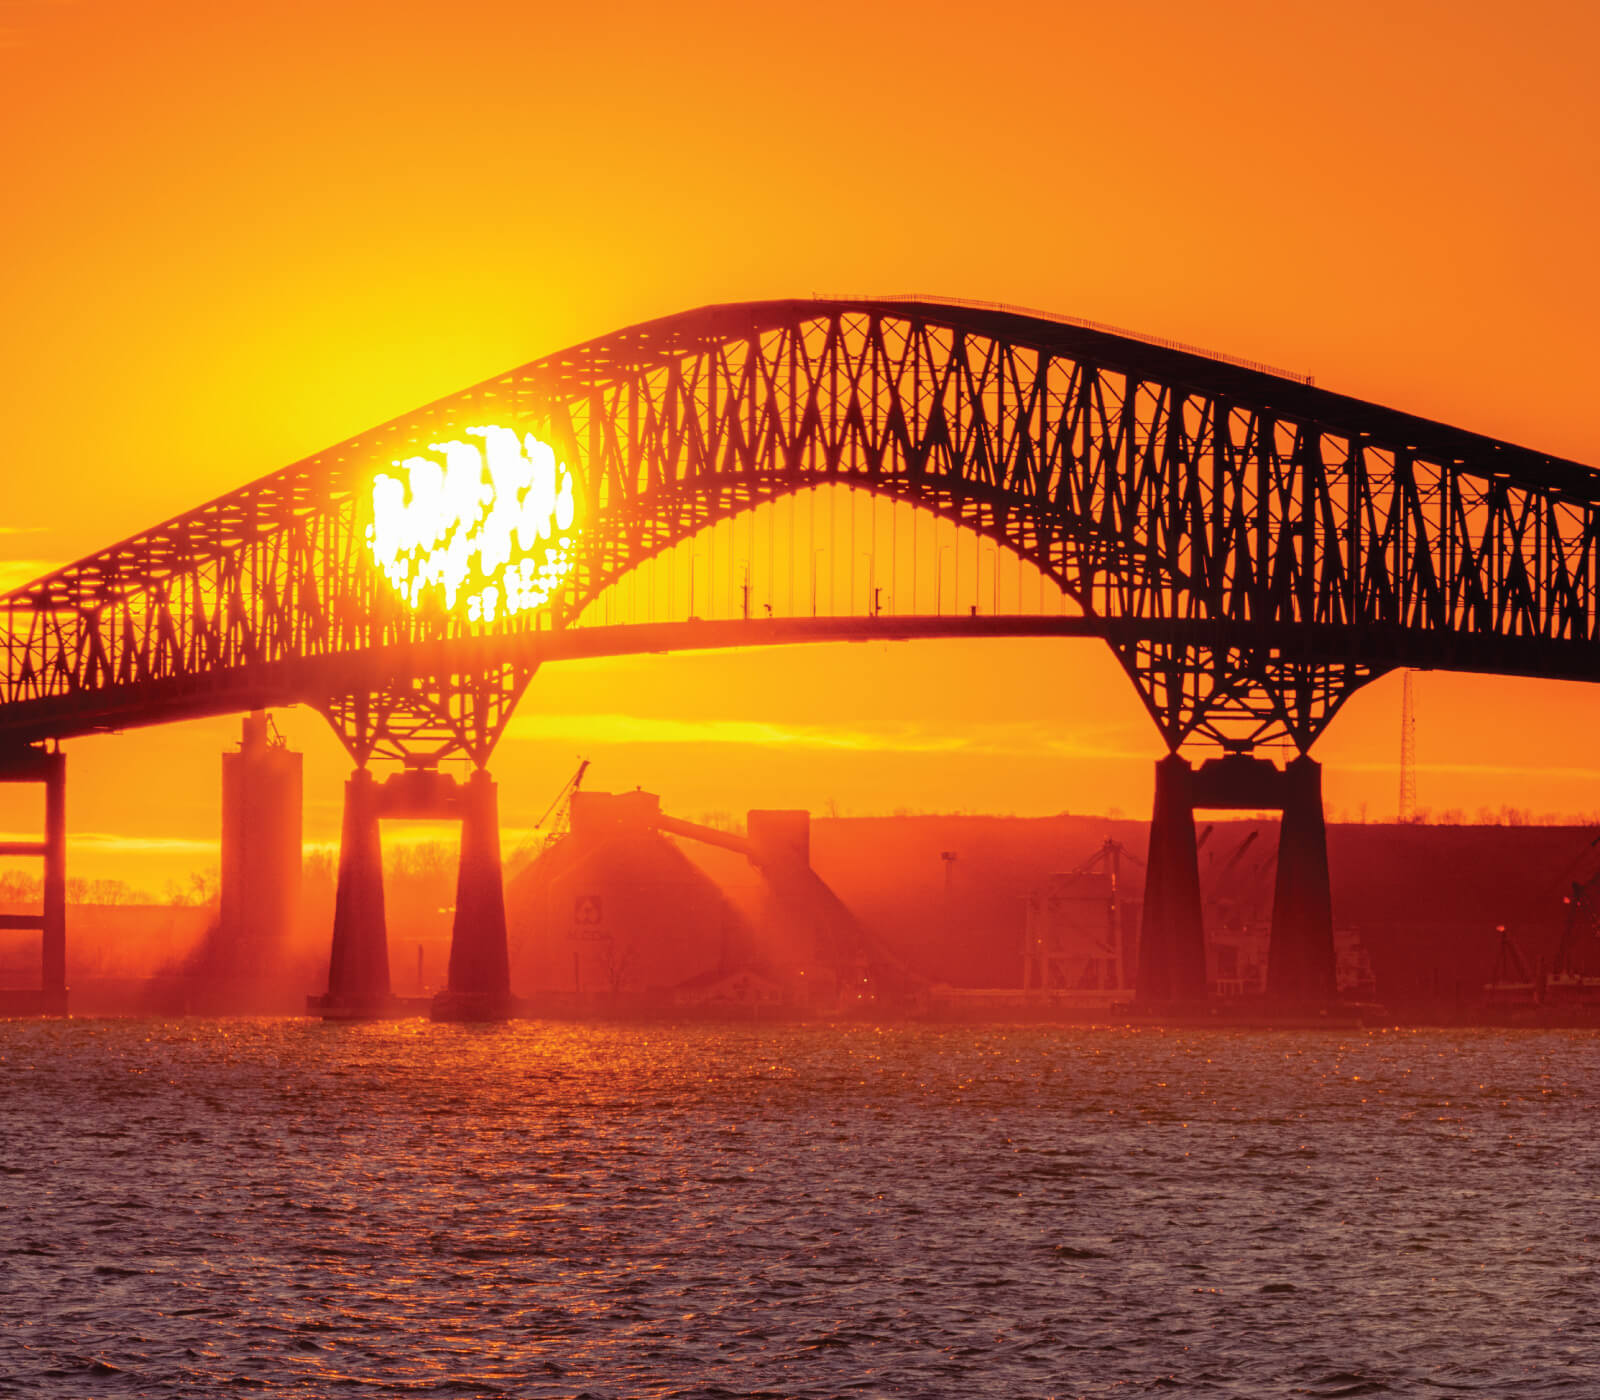 Sun setting behind former Key Bridge in Baltimore, Maryland